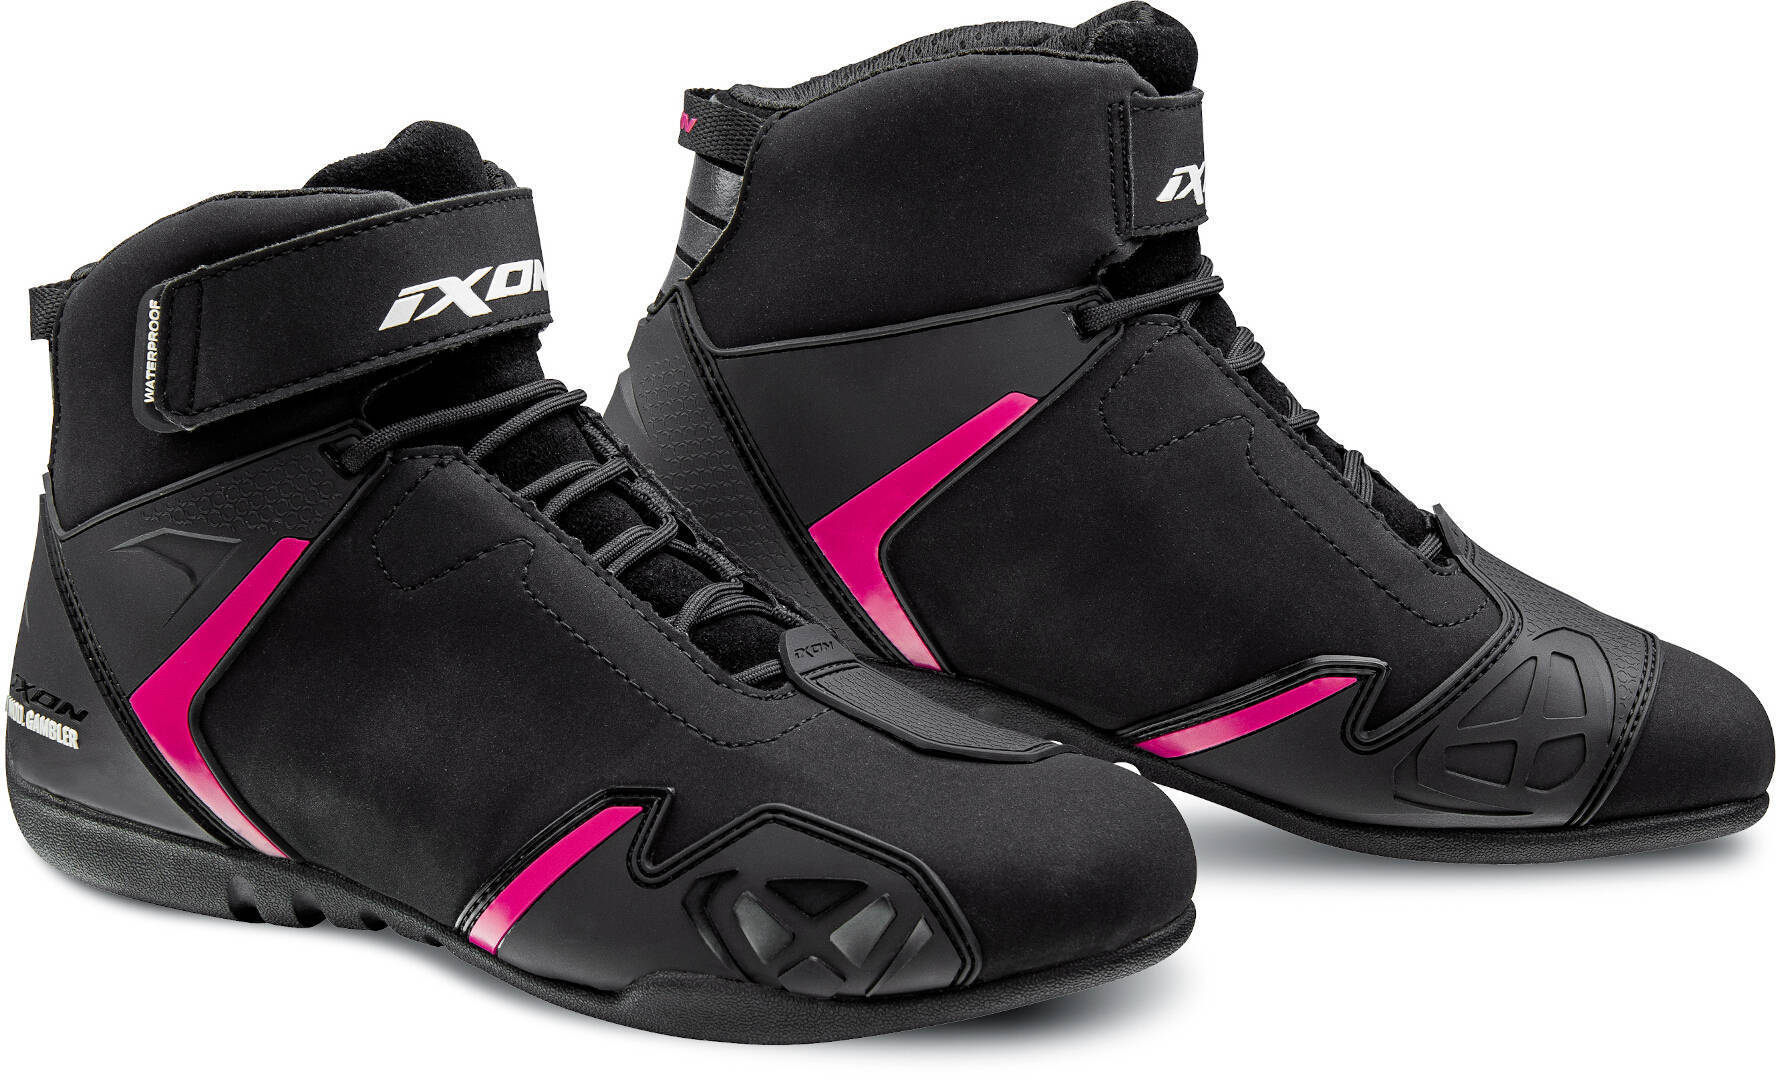 Ixon Gambler WP Ladies Motorcycle Shoes, black-pink, Size 41 for Women, black-pink, Size 41 for Women